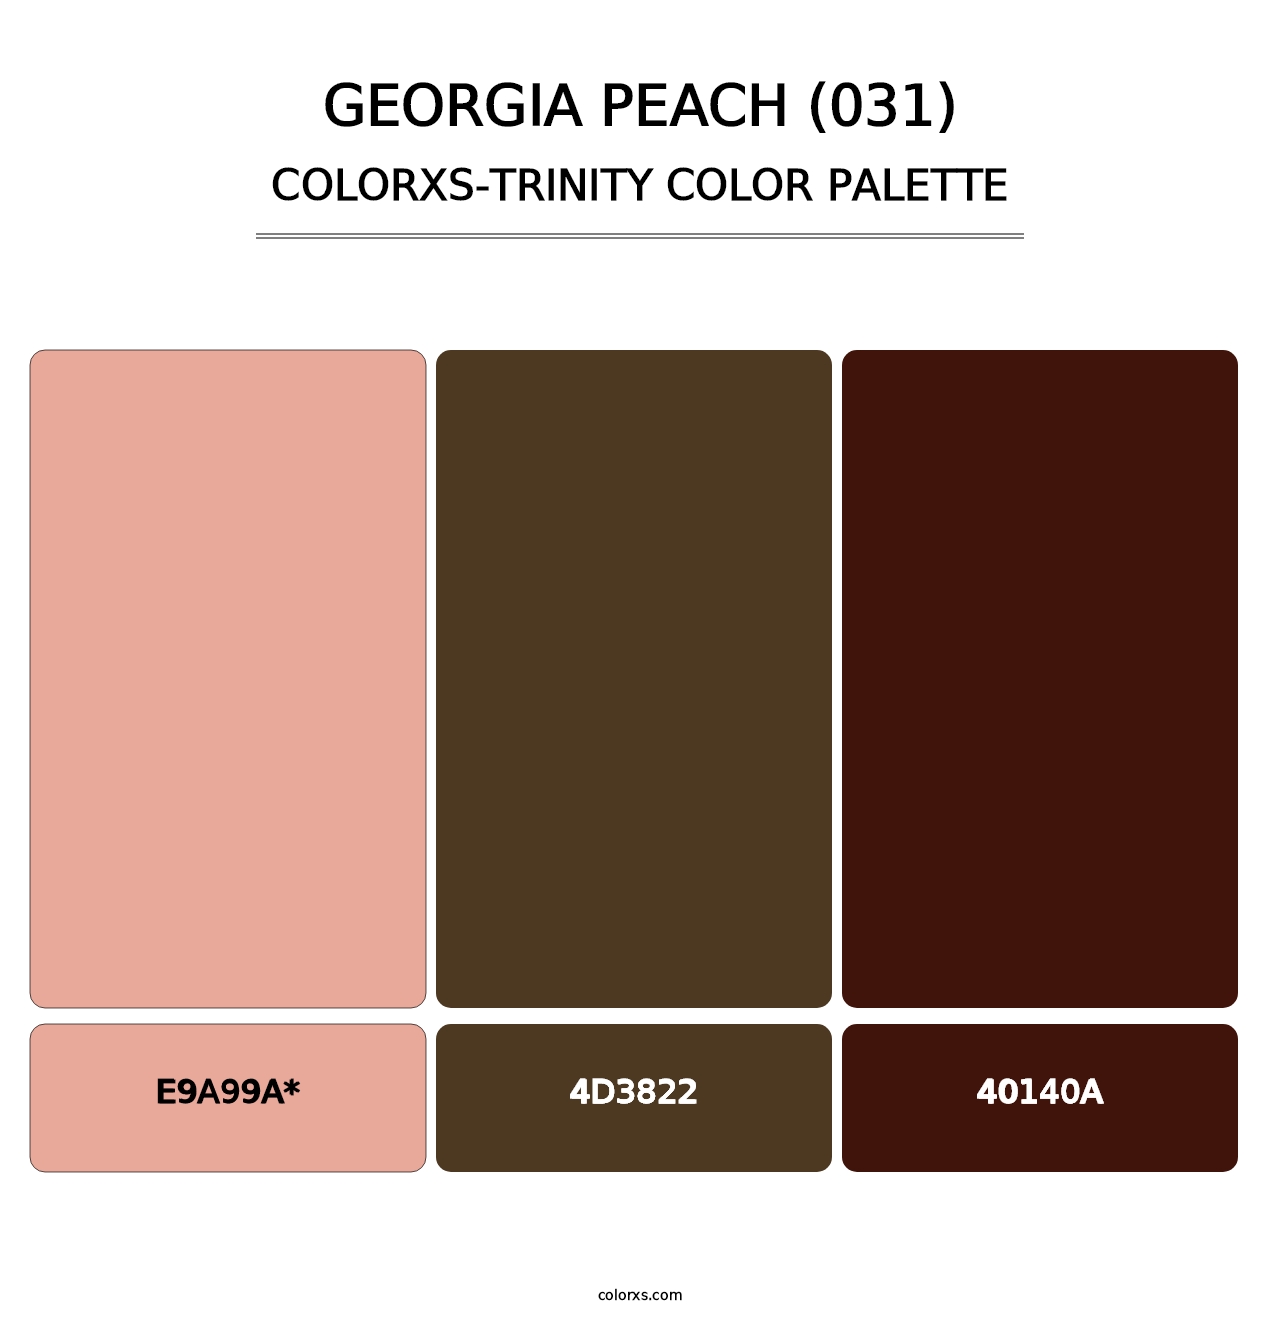 Georgia Peach (031) - Colorxs Trinity Palette